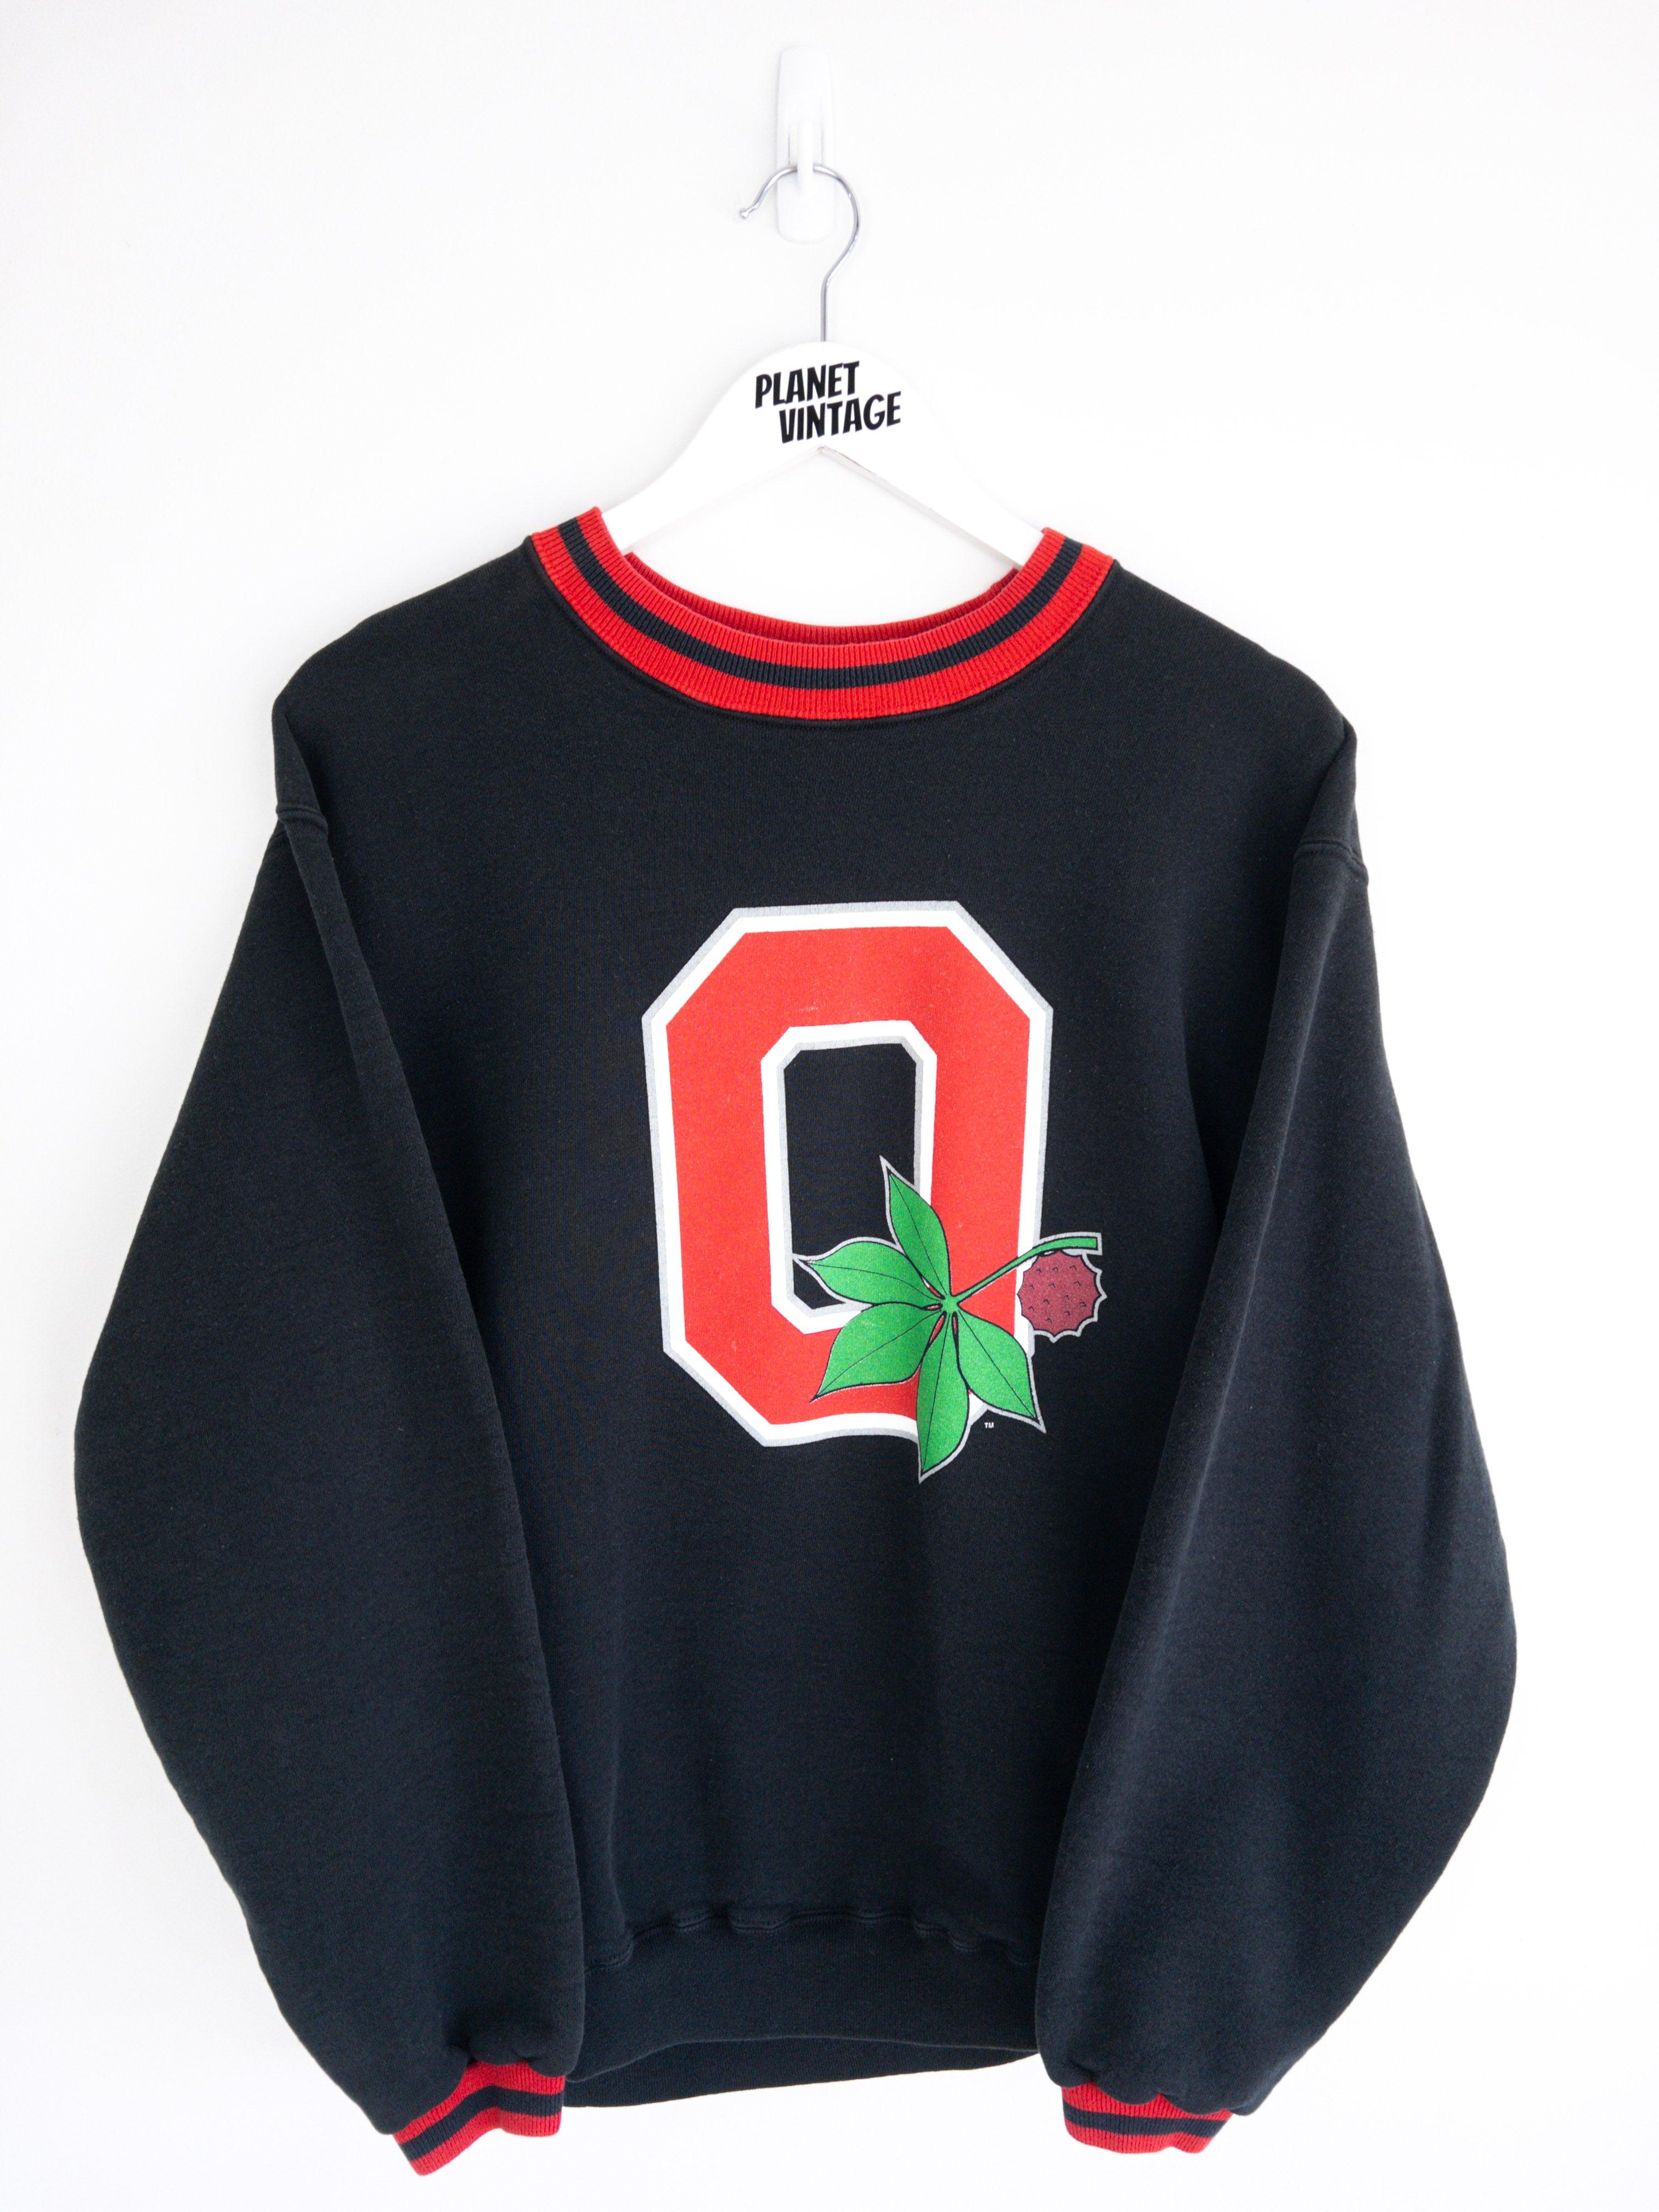 Ohio State Buckeyes Sweatshirt (M) - Planet Vintage Store